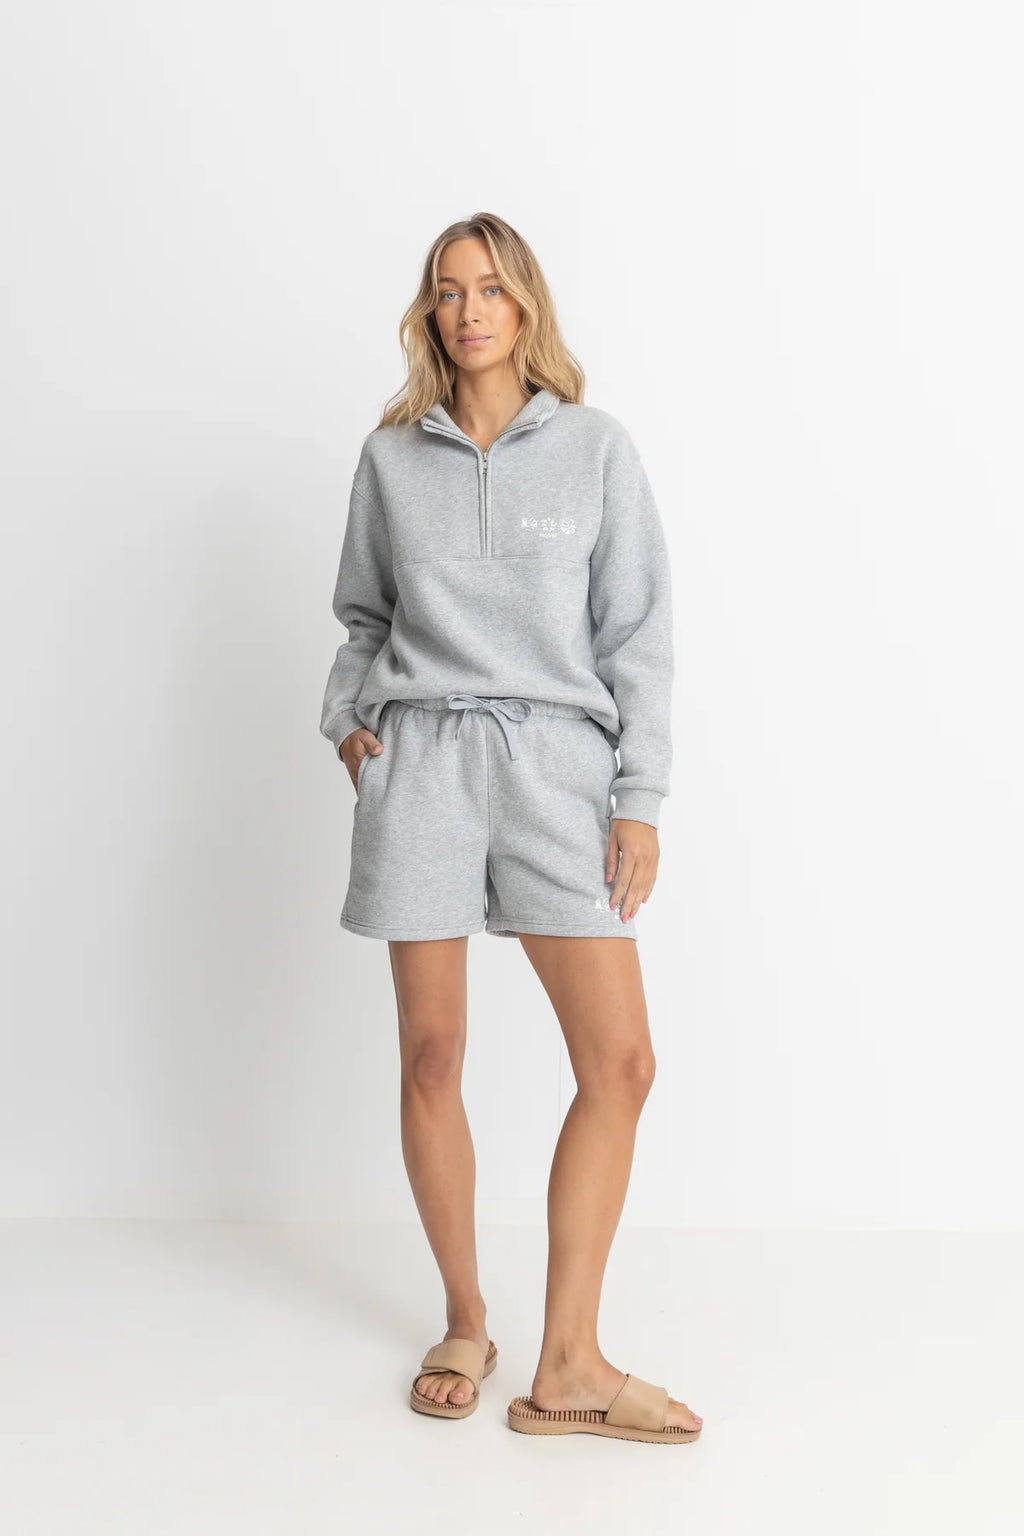 Pacifica Fleece Short / Grey